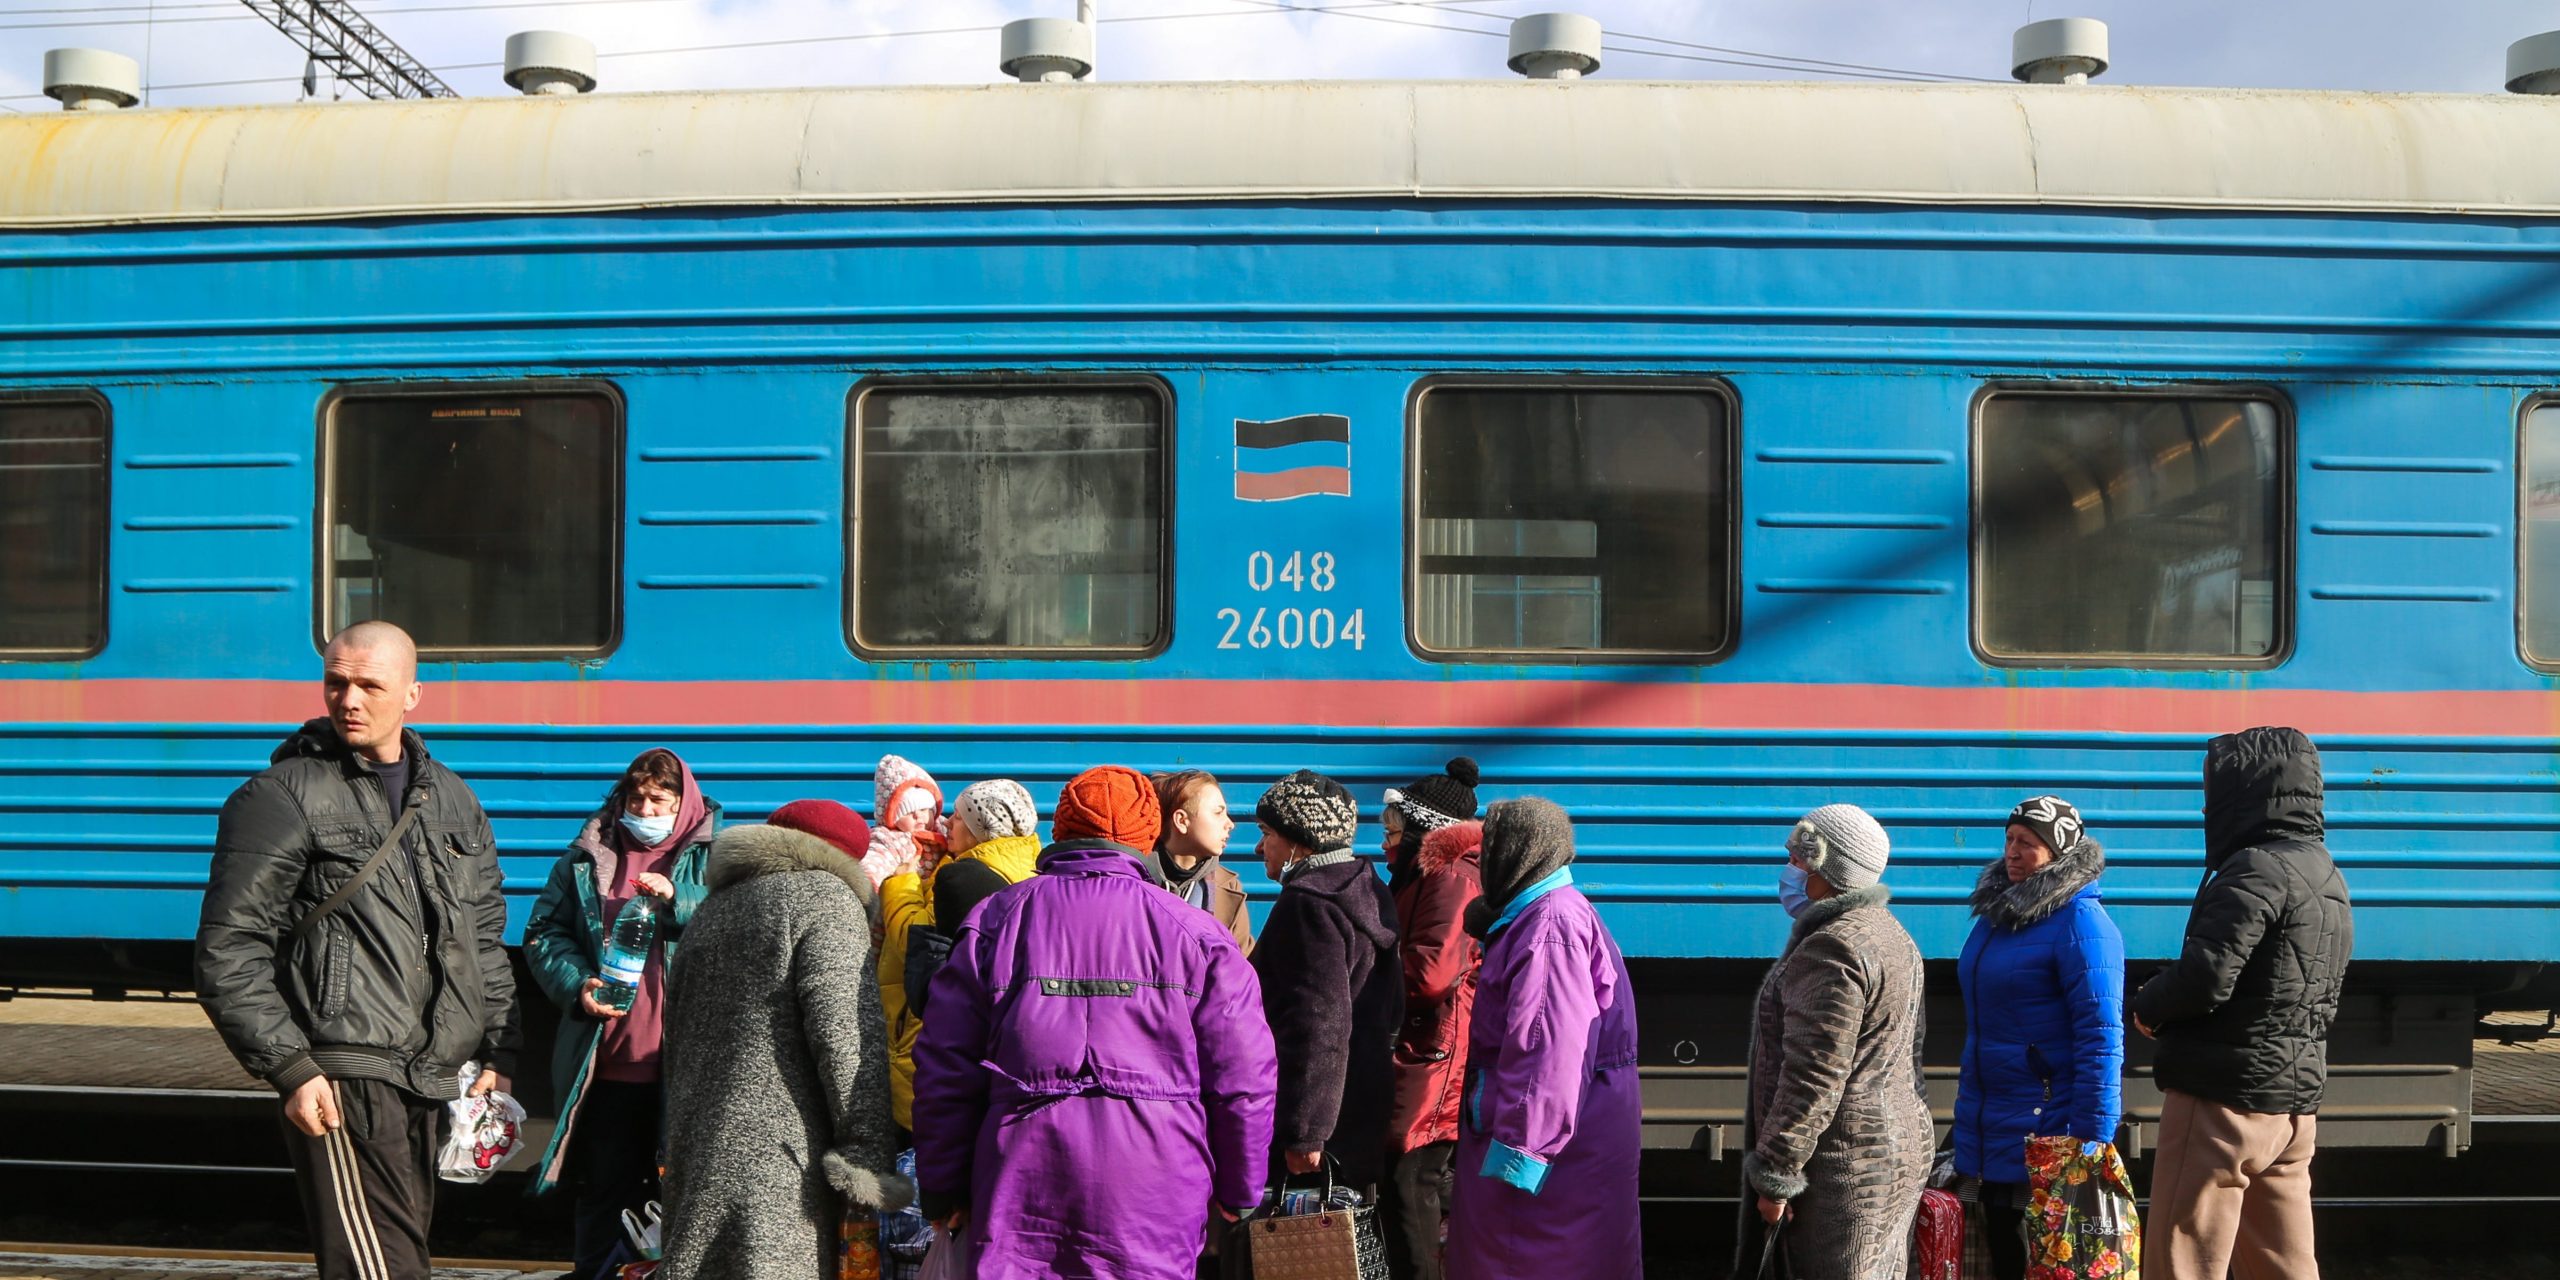 Ukrainian citizens wait outside a train.